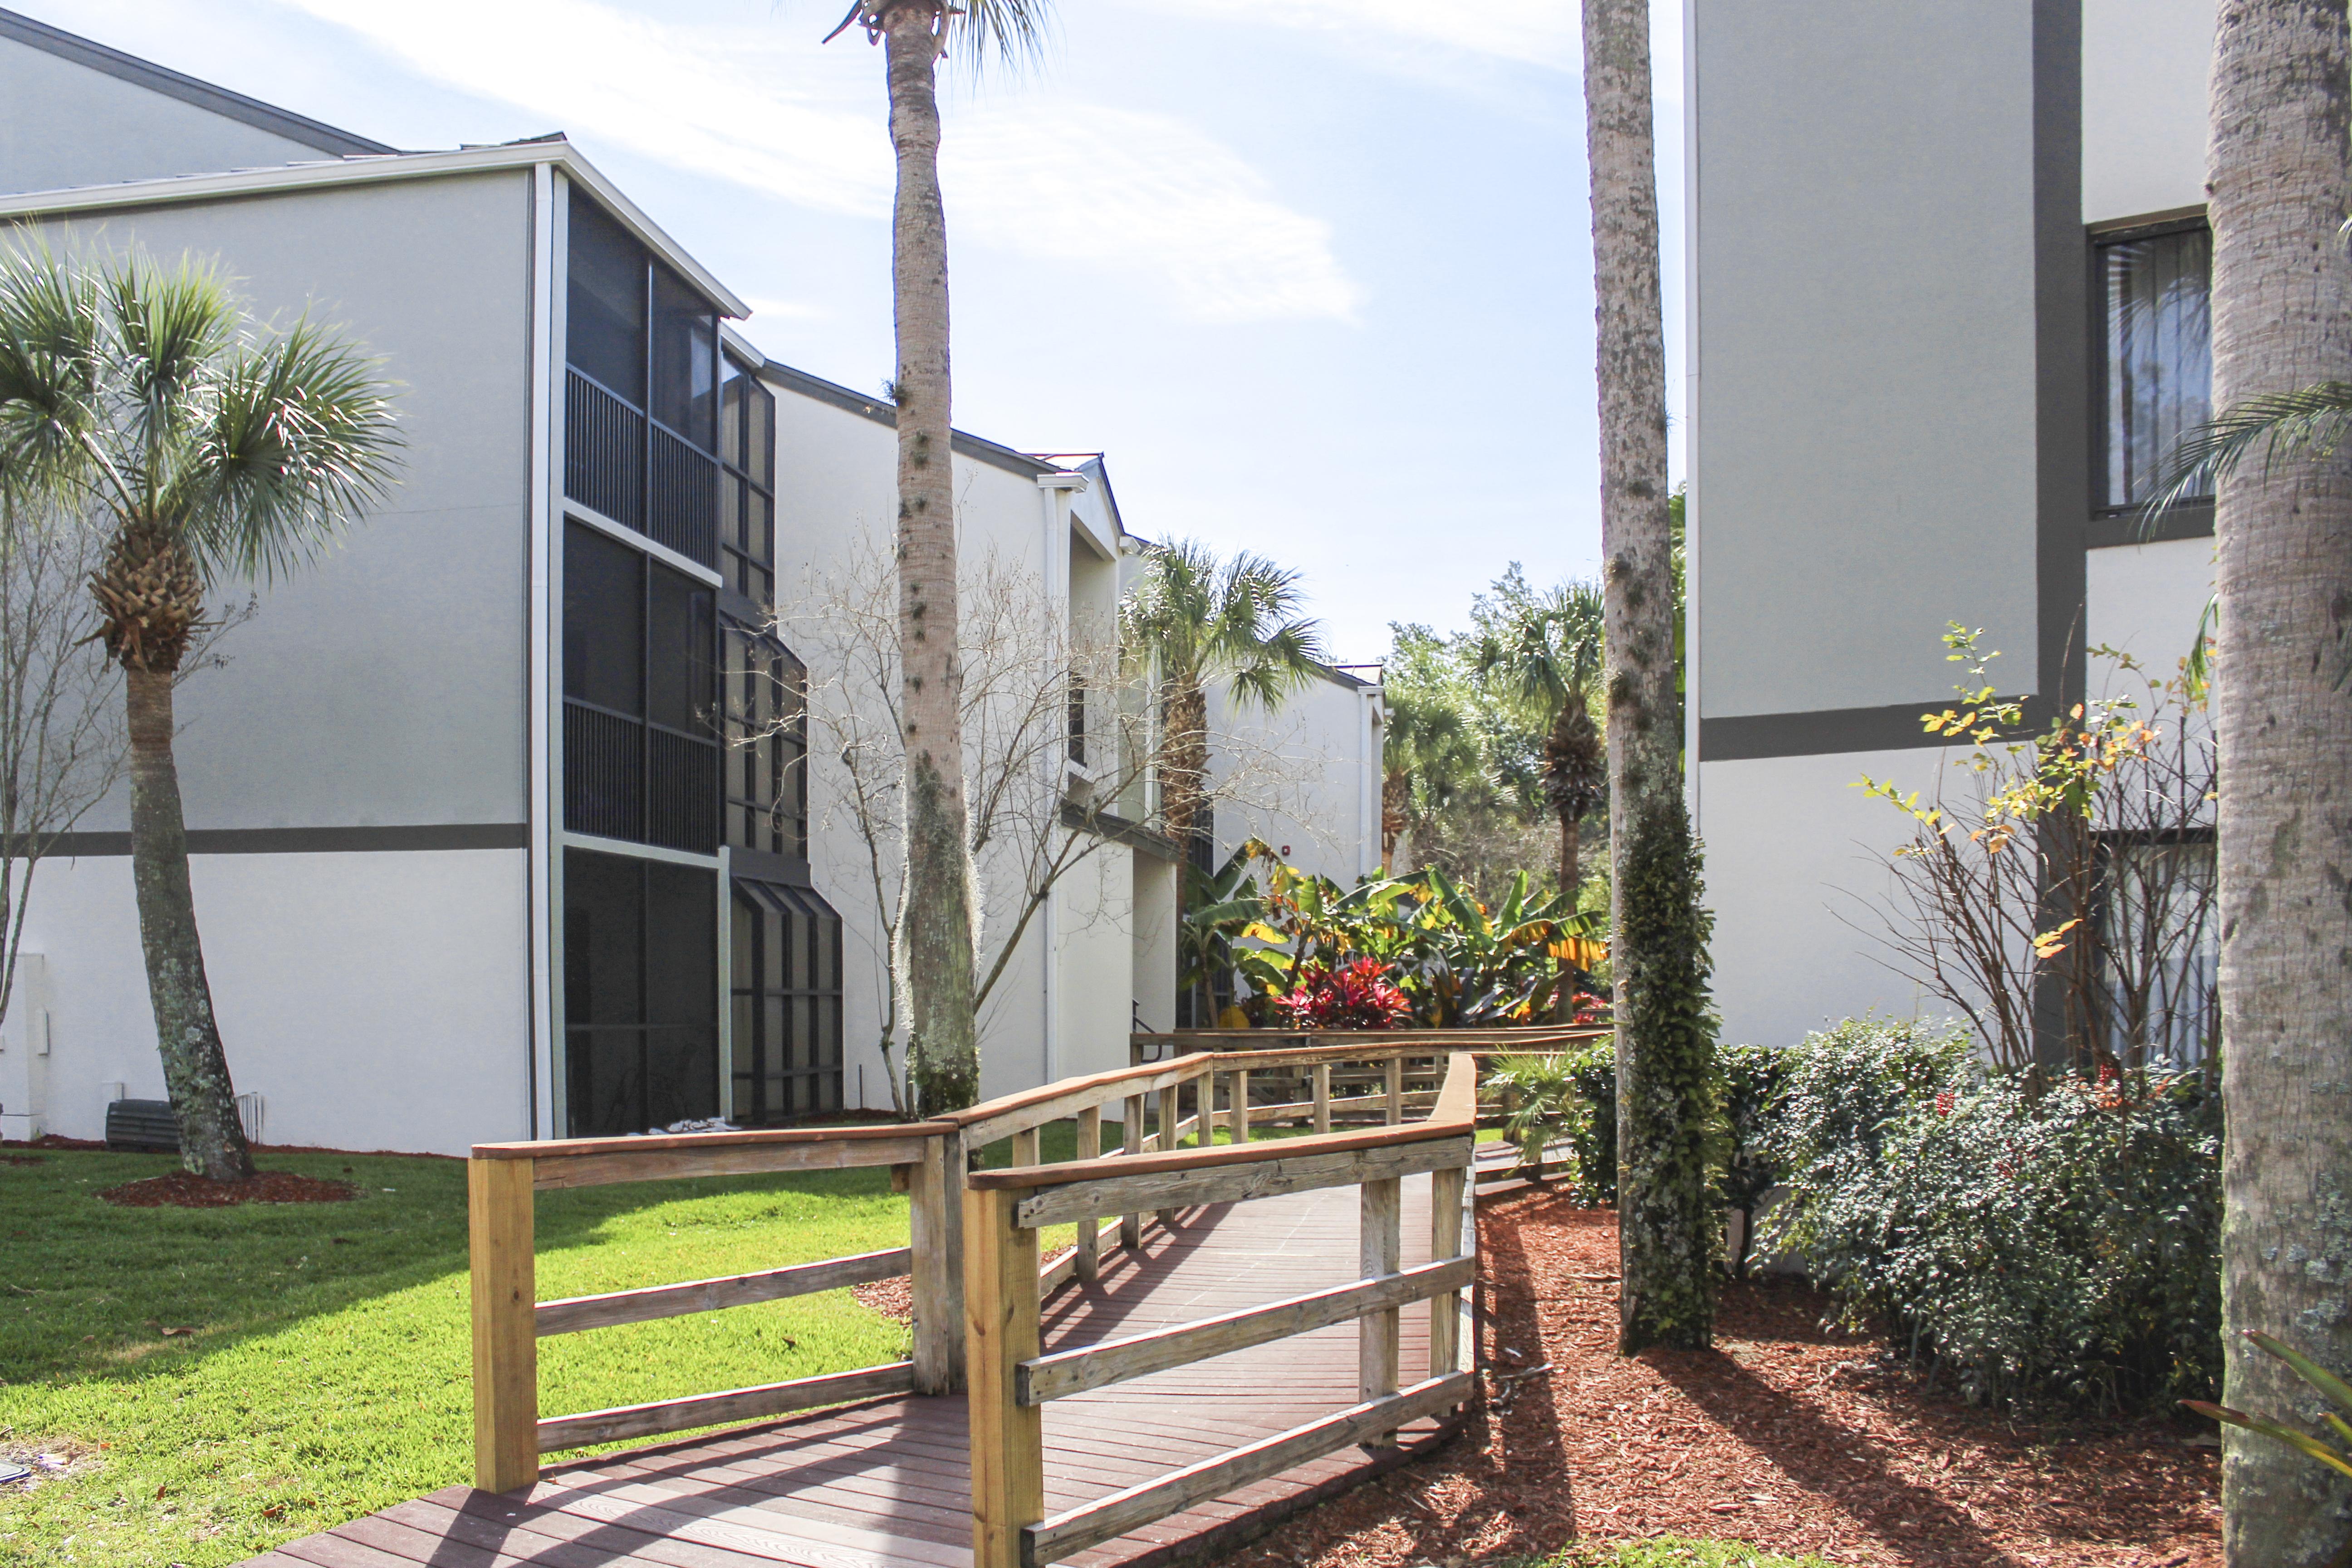 Parkway International Resort Orlando Exterior photo